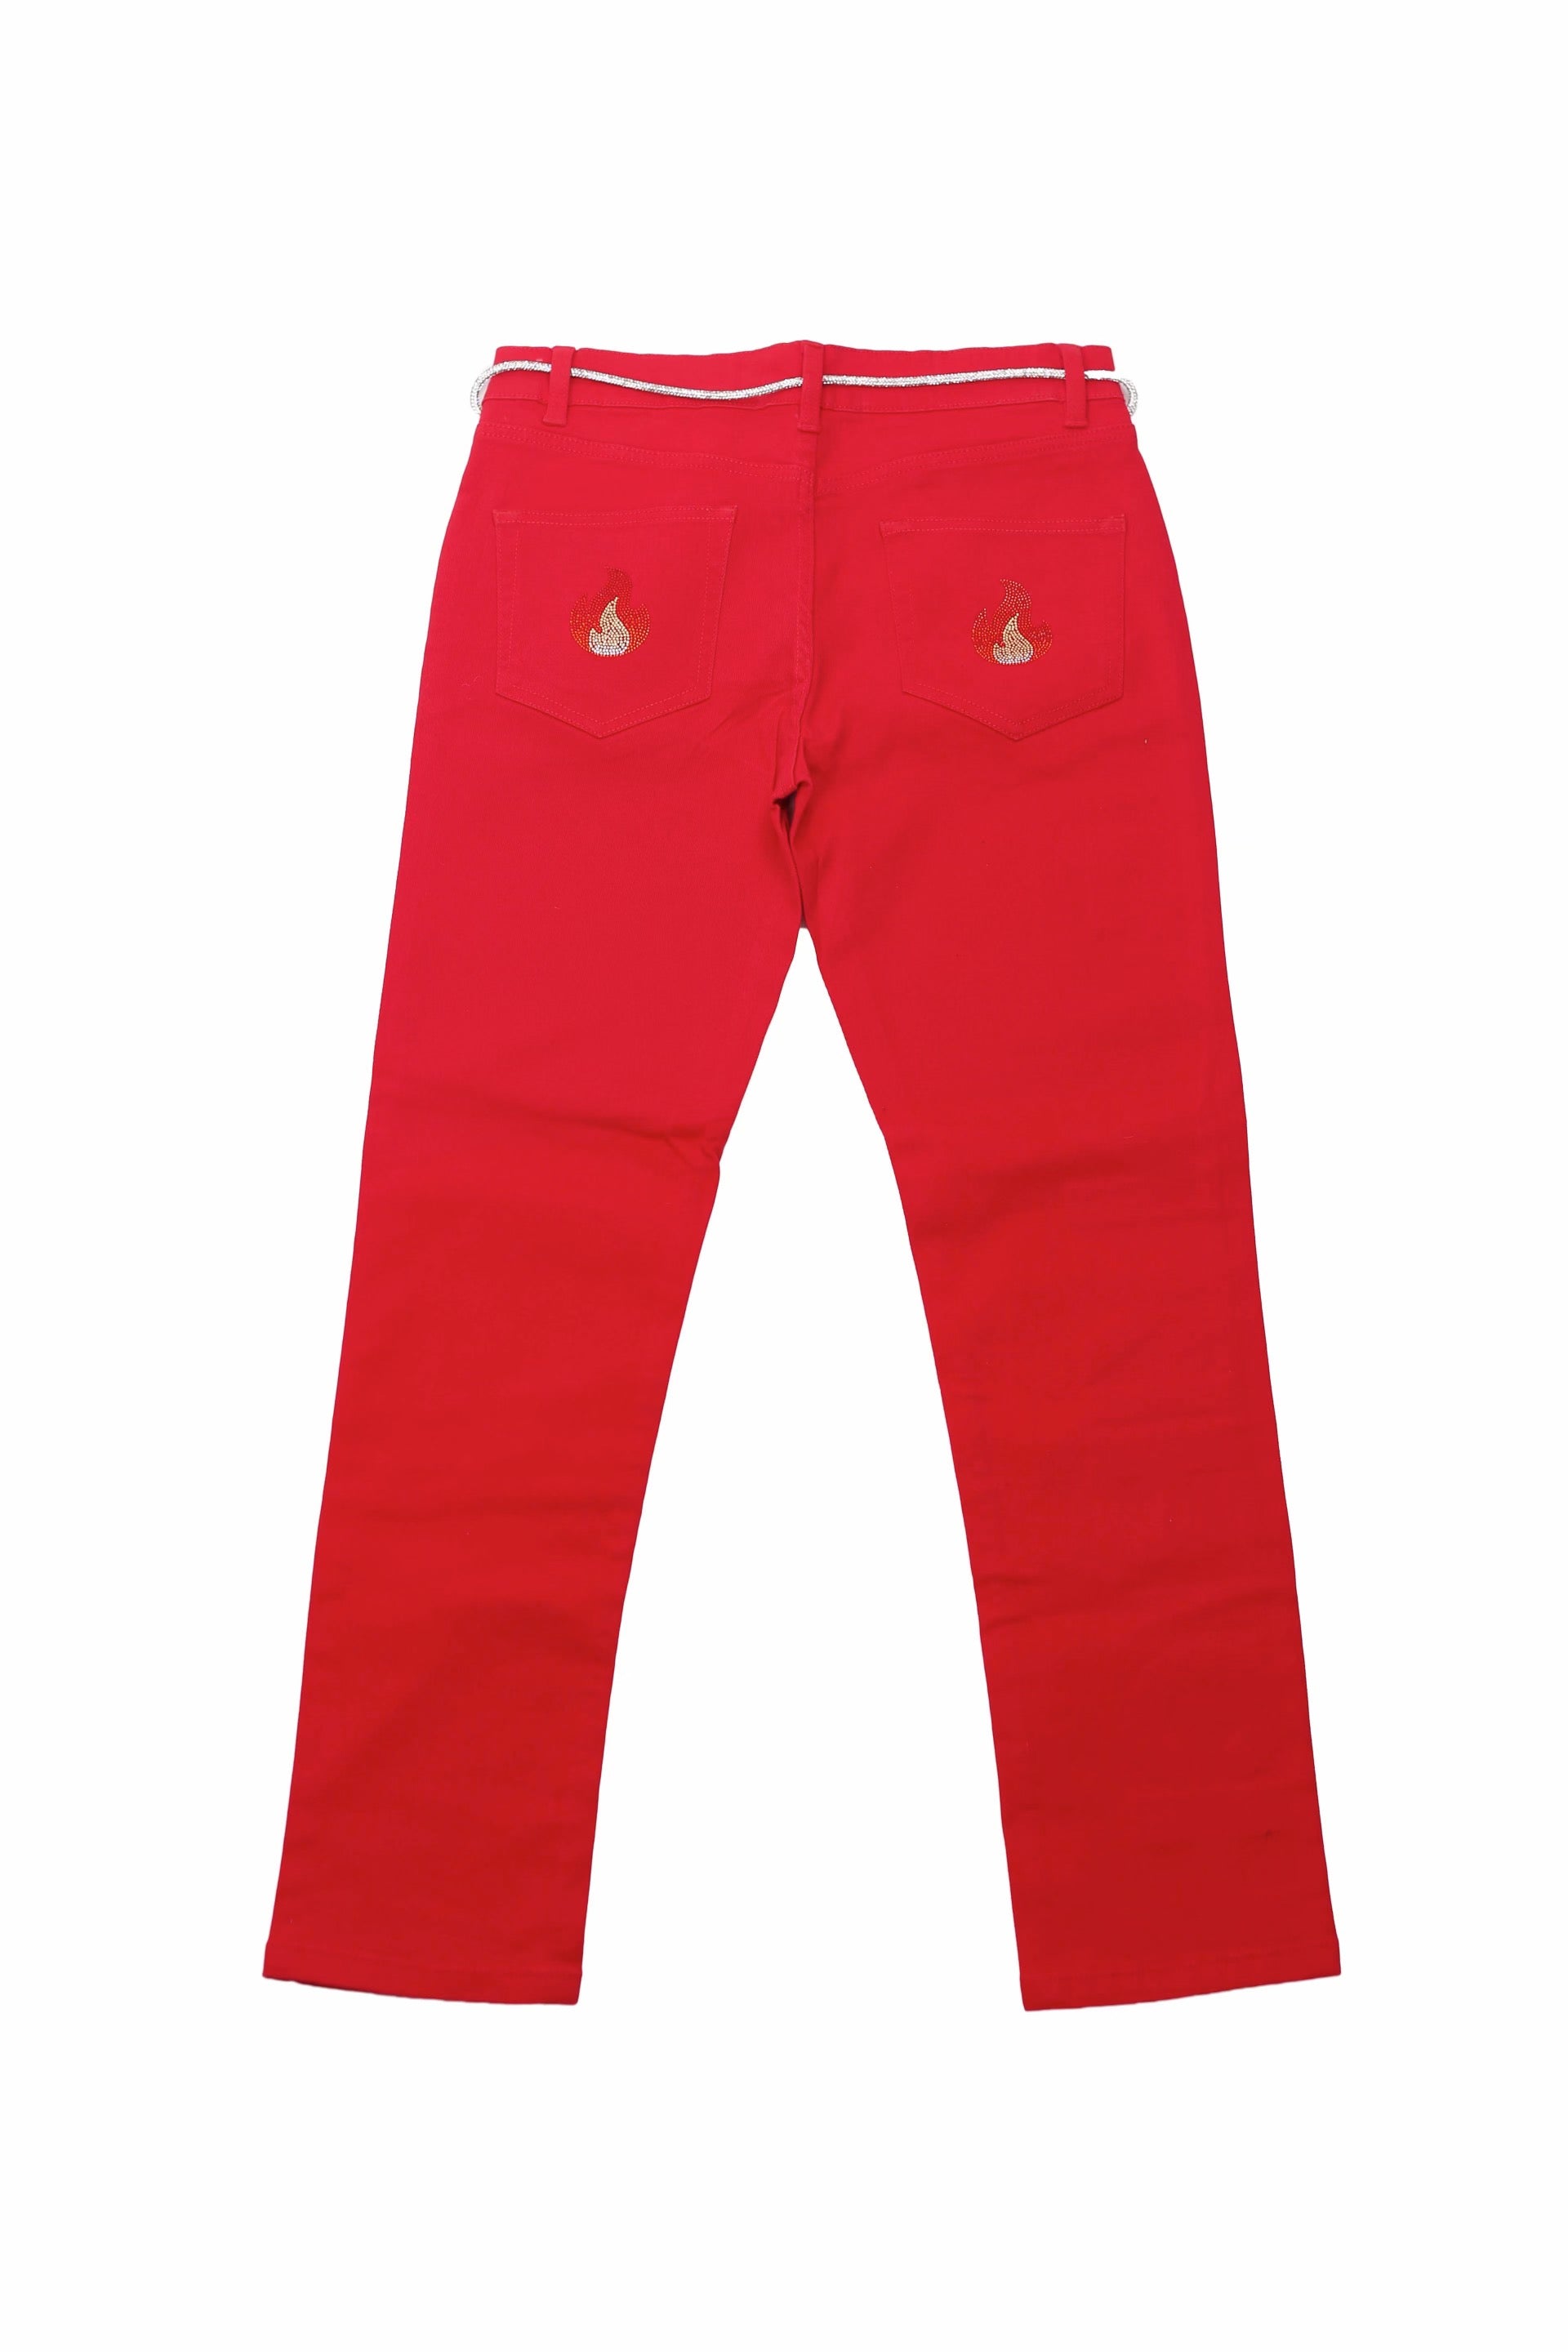 VVS Pants in Red & Blue